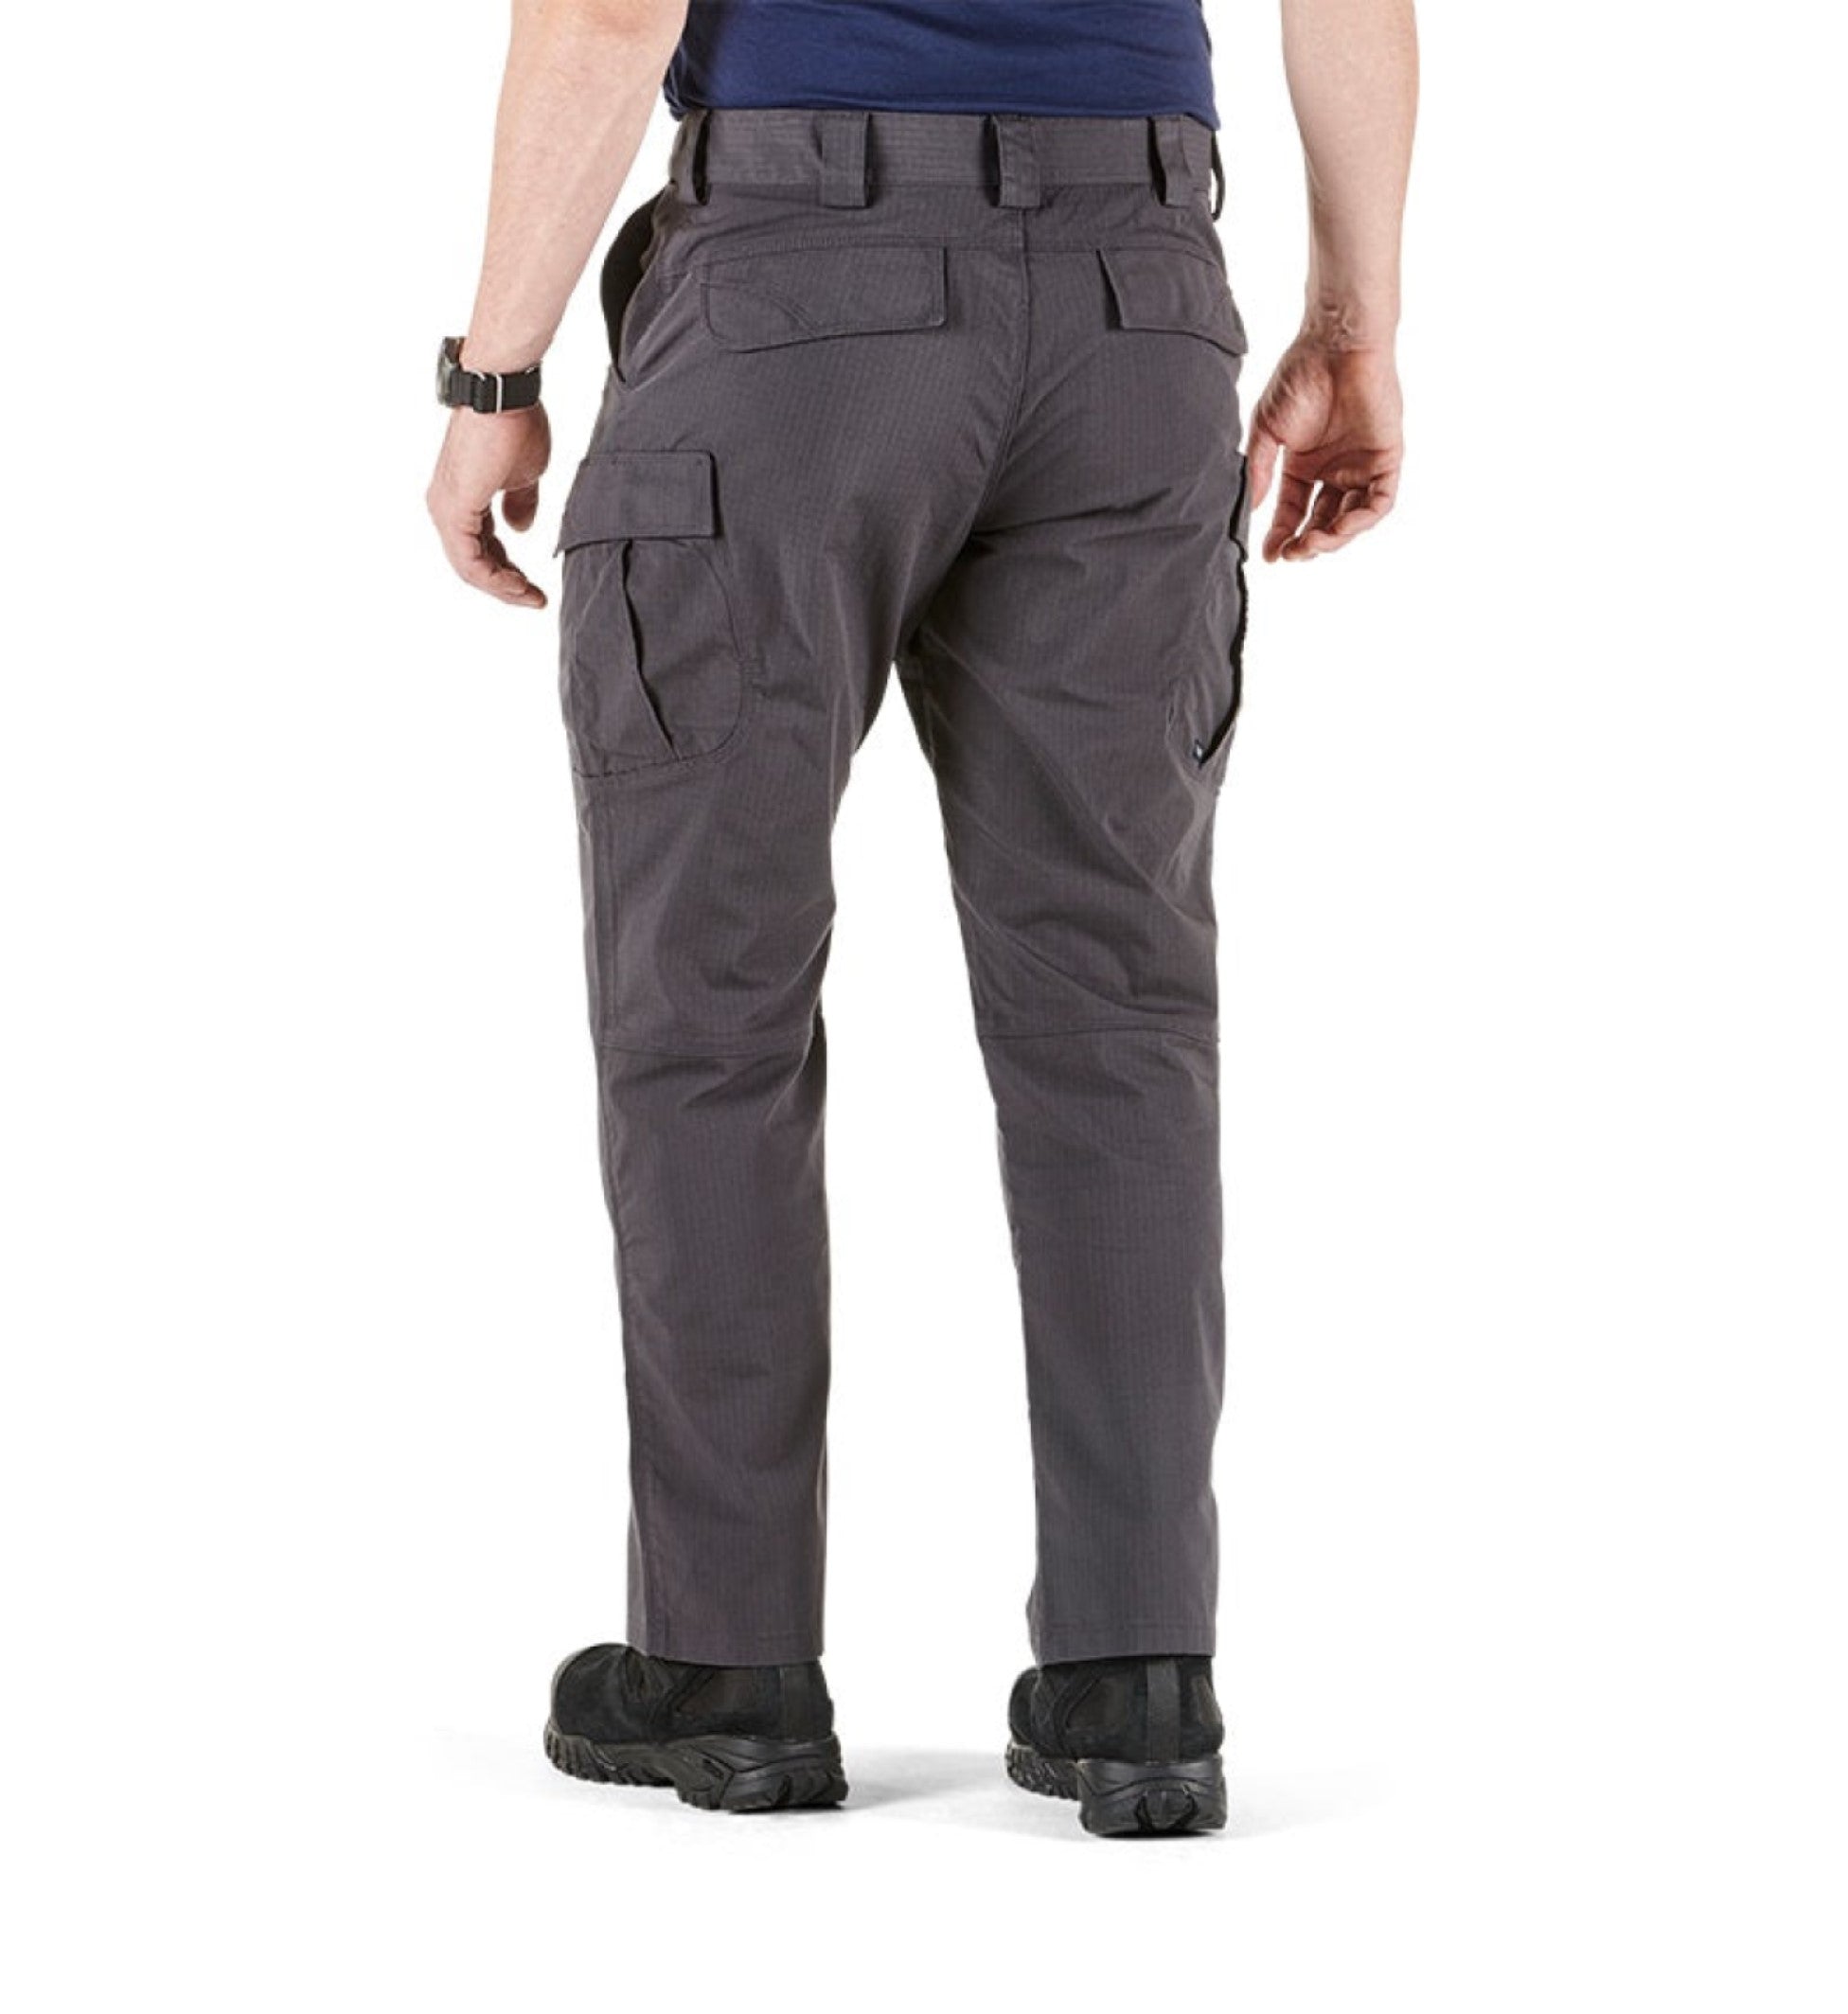 5.11® Stryke® Women's Pant: High-Performance Tactical Pants